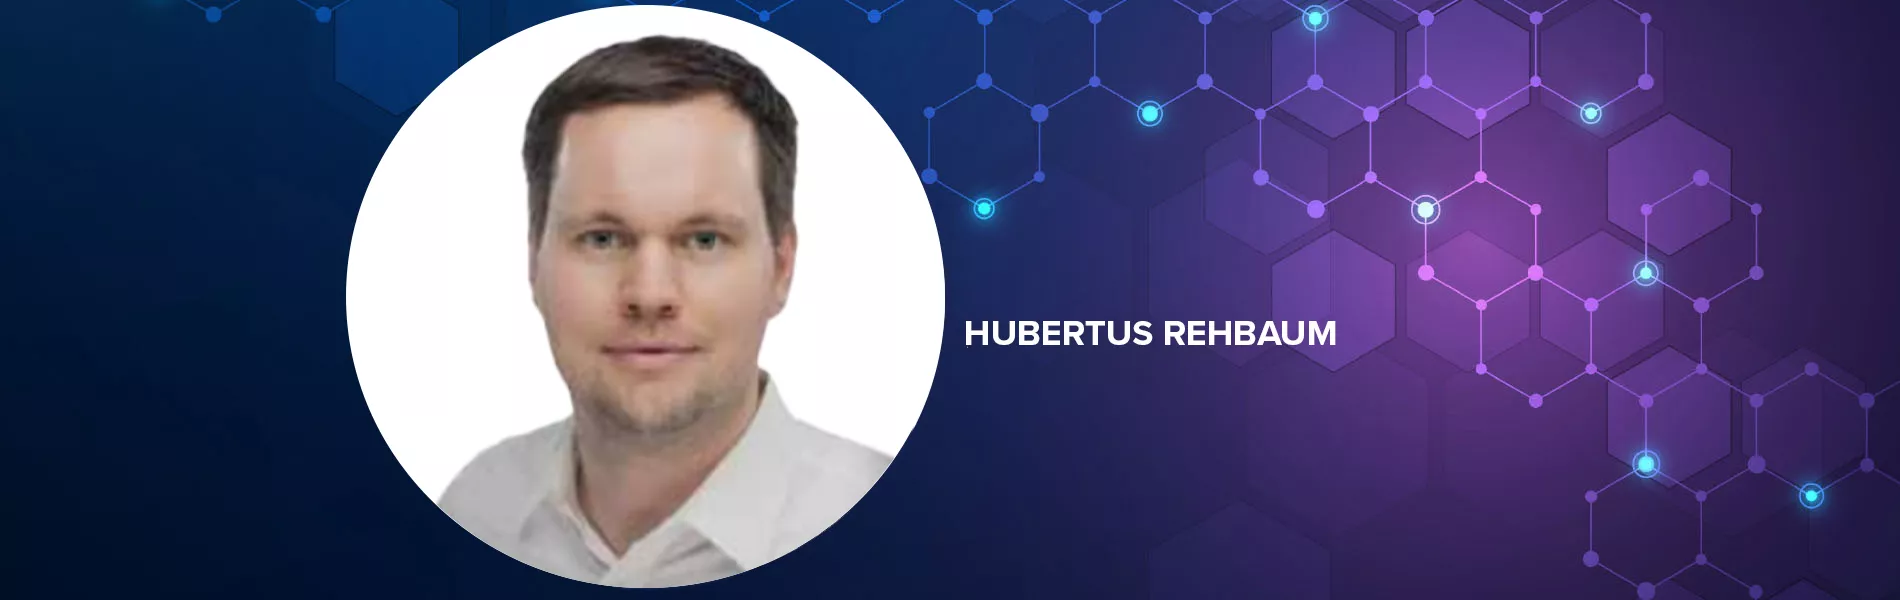 CoP Leader Profiles: Hubertus Rehbaum